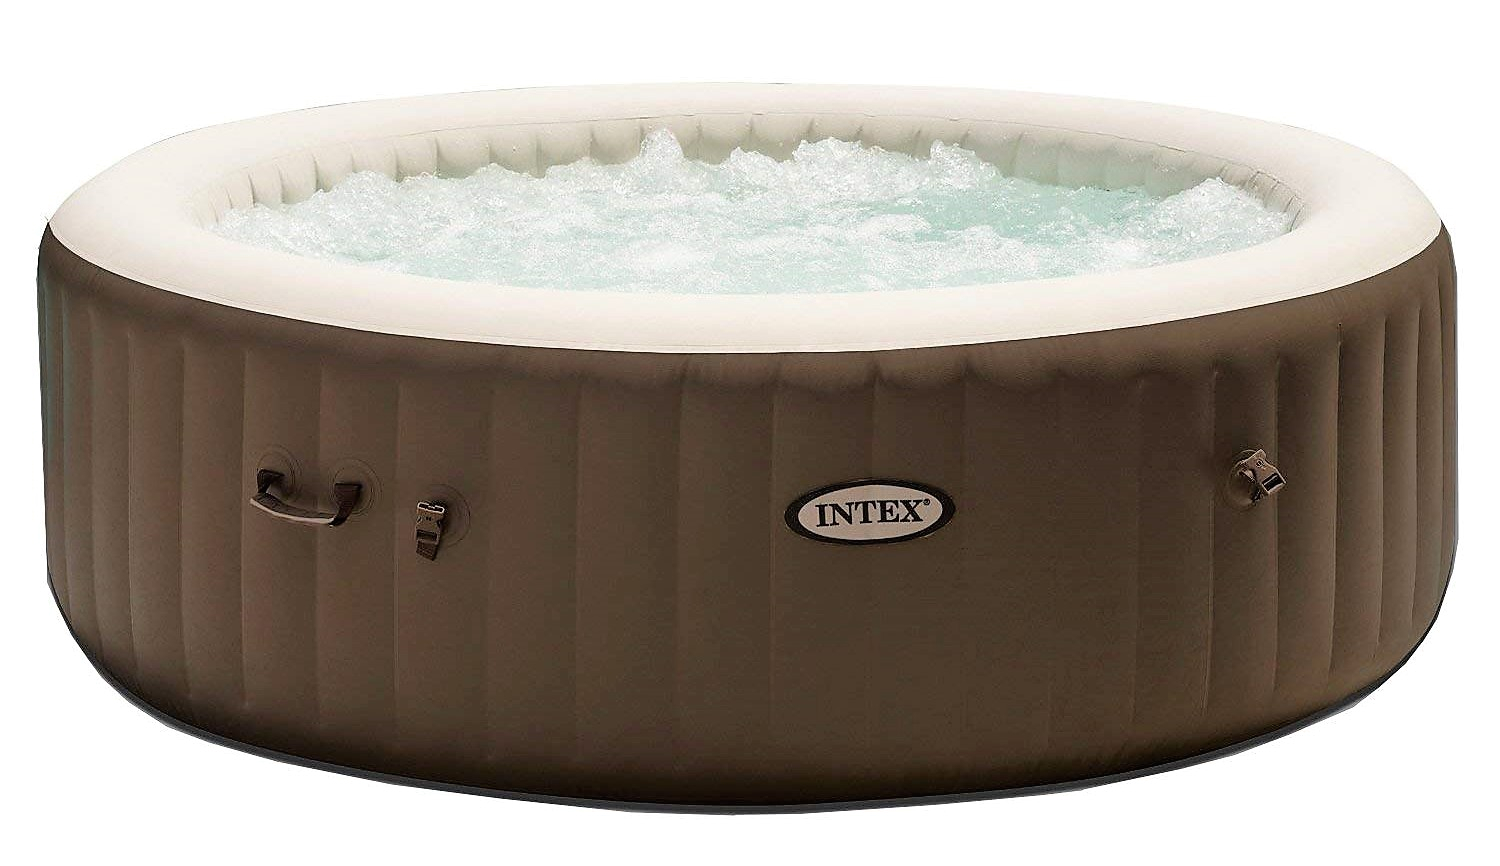 Bathtubs Under $500 5 Cheap Hot Tubs Under $500 Best Hot Tub Reviews